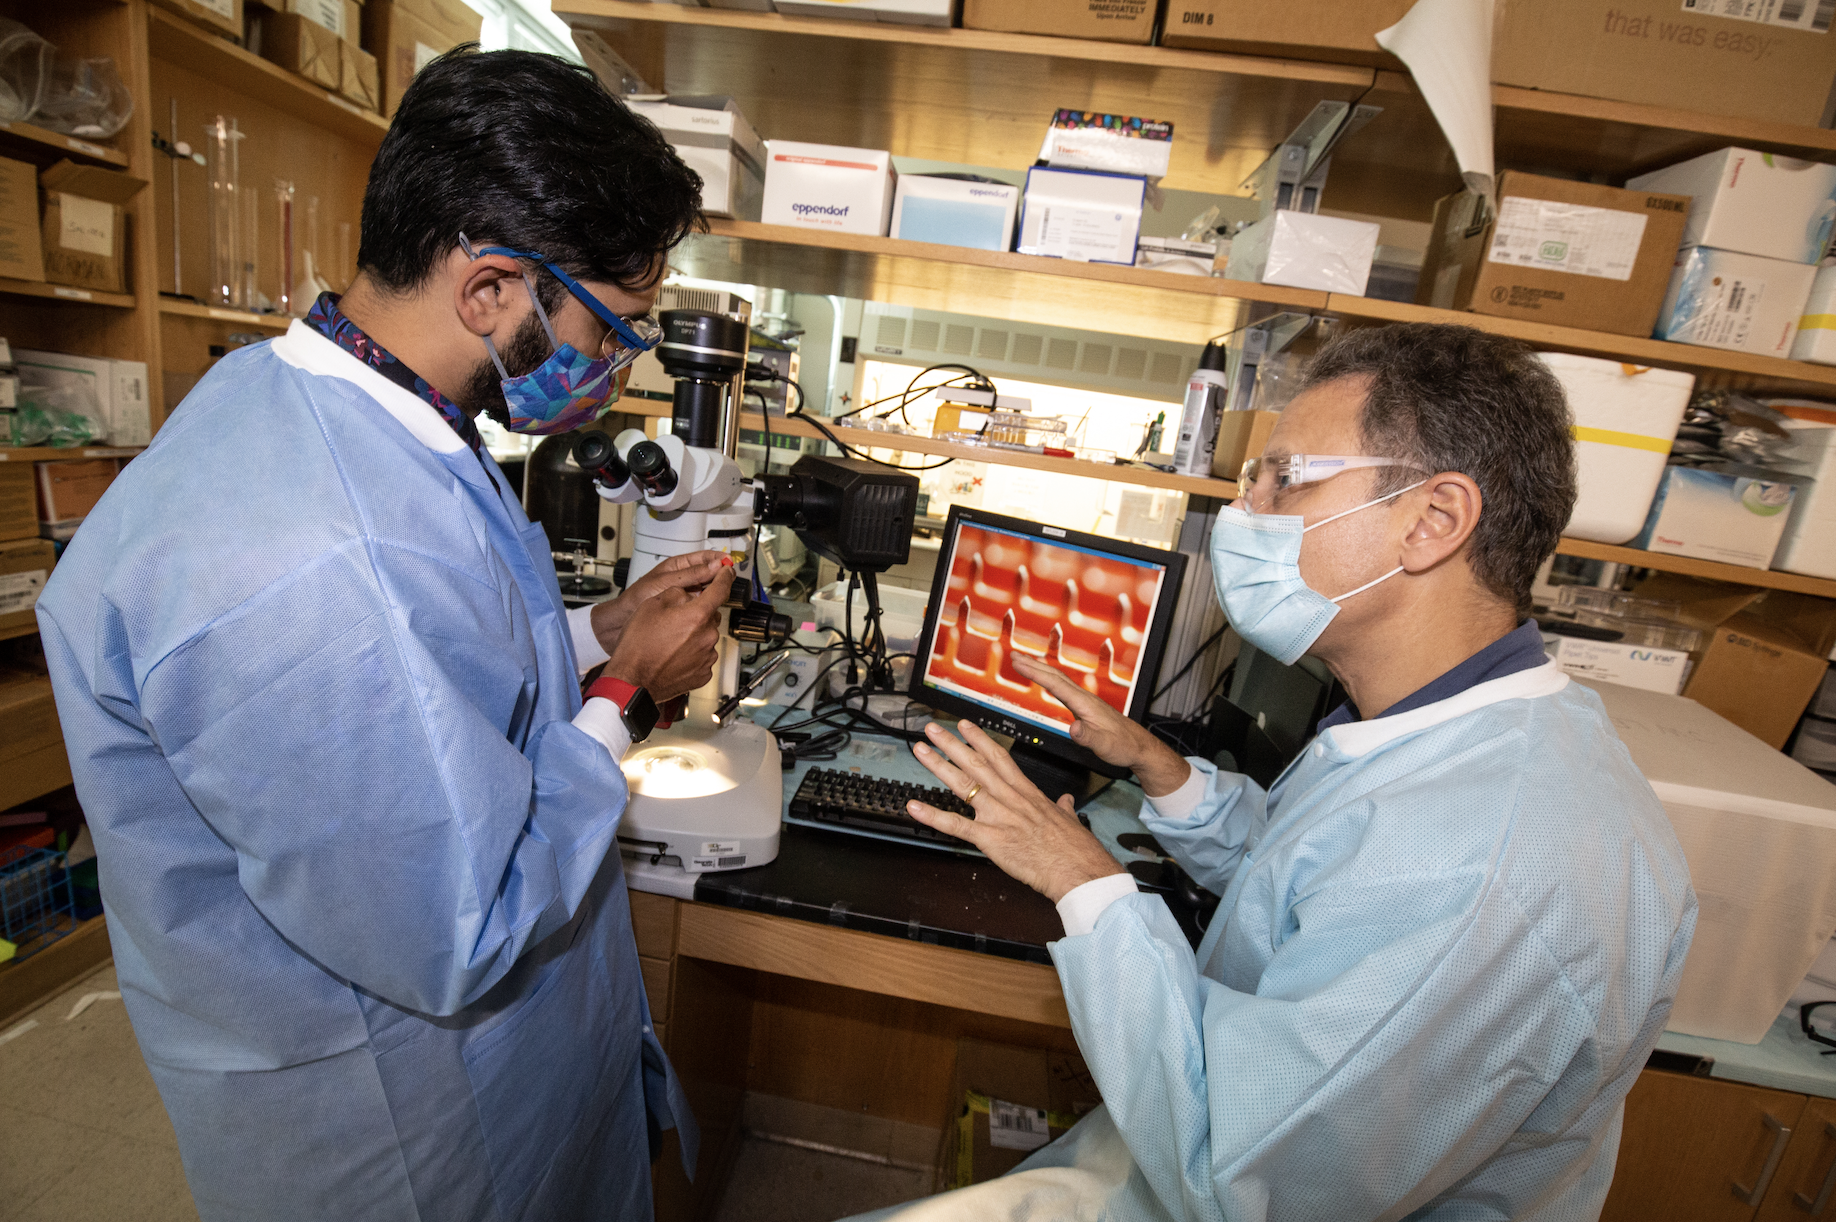 Georgia Tech researchers Saad Bhamla (left) and Mark Prausnitz (right) study the ePatch in the laboratory. (Photo credit: Candler Hobbs, Georgia Tech)